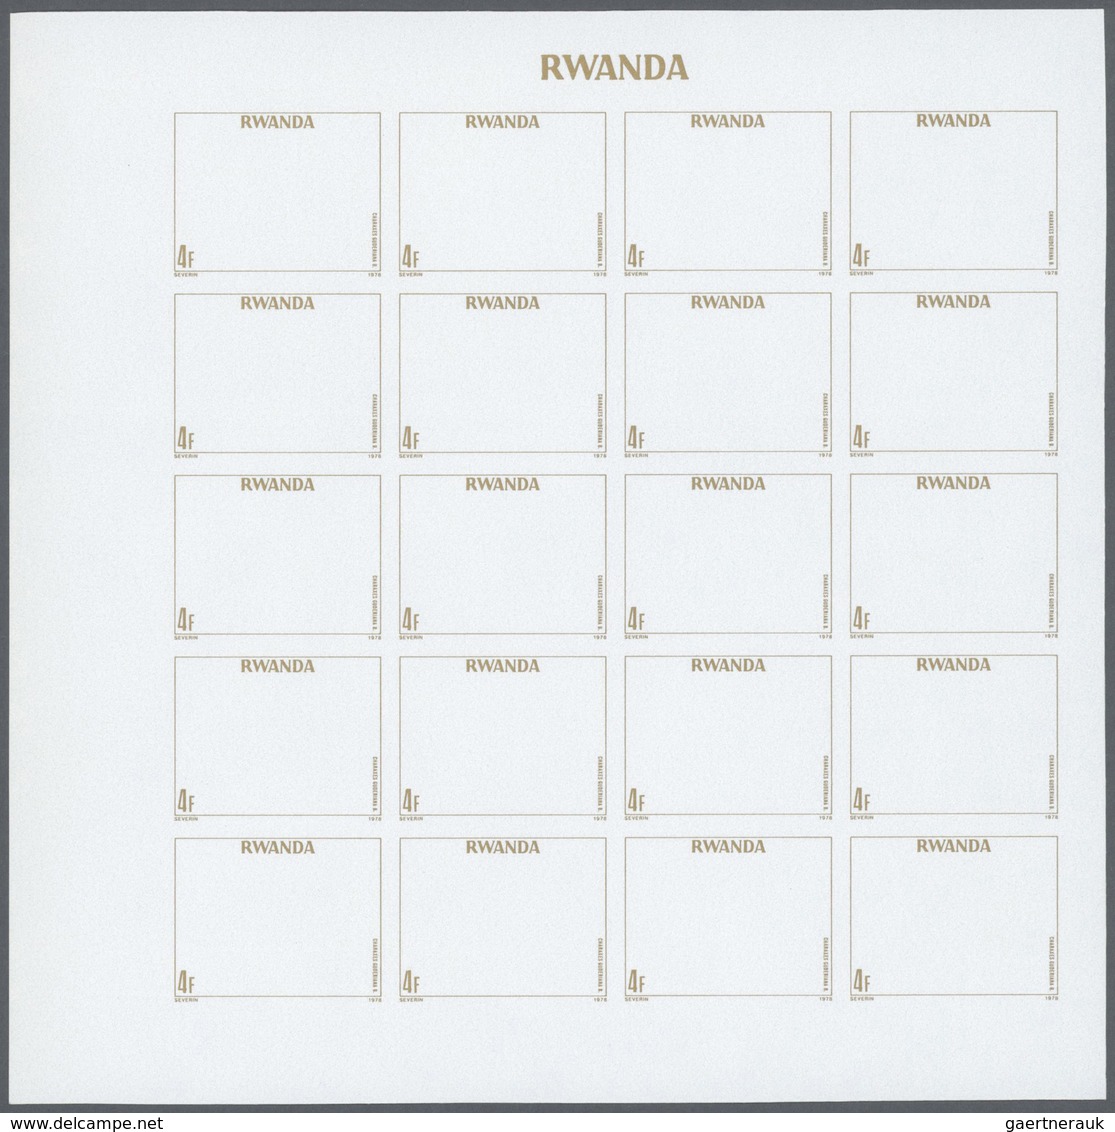 25802 Thematik: Tiere-Schmetterlinge / animals-butterflies: 1979, Rwanda. Progressive proofs set for the B